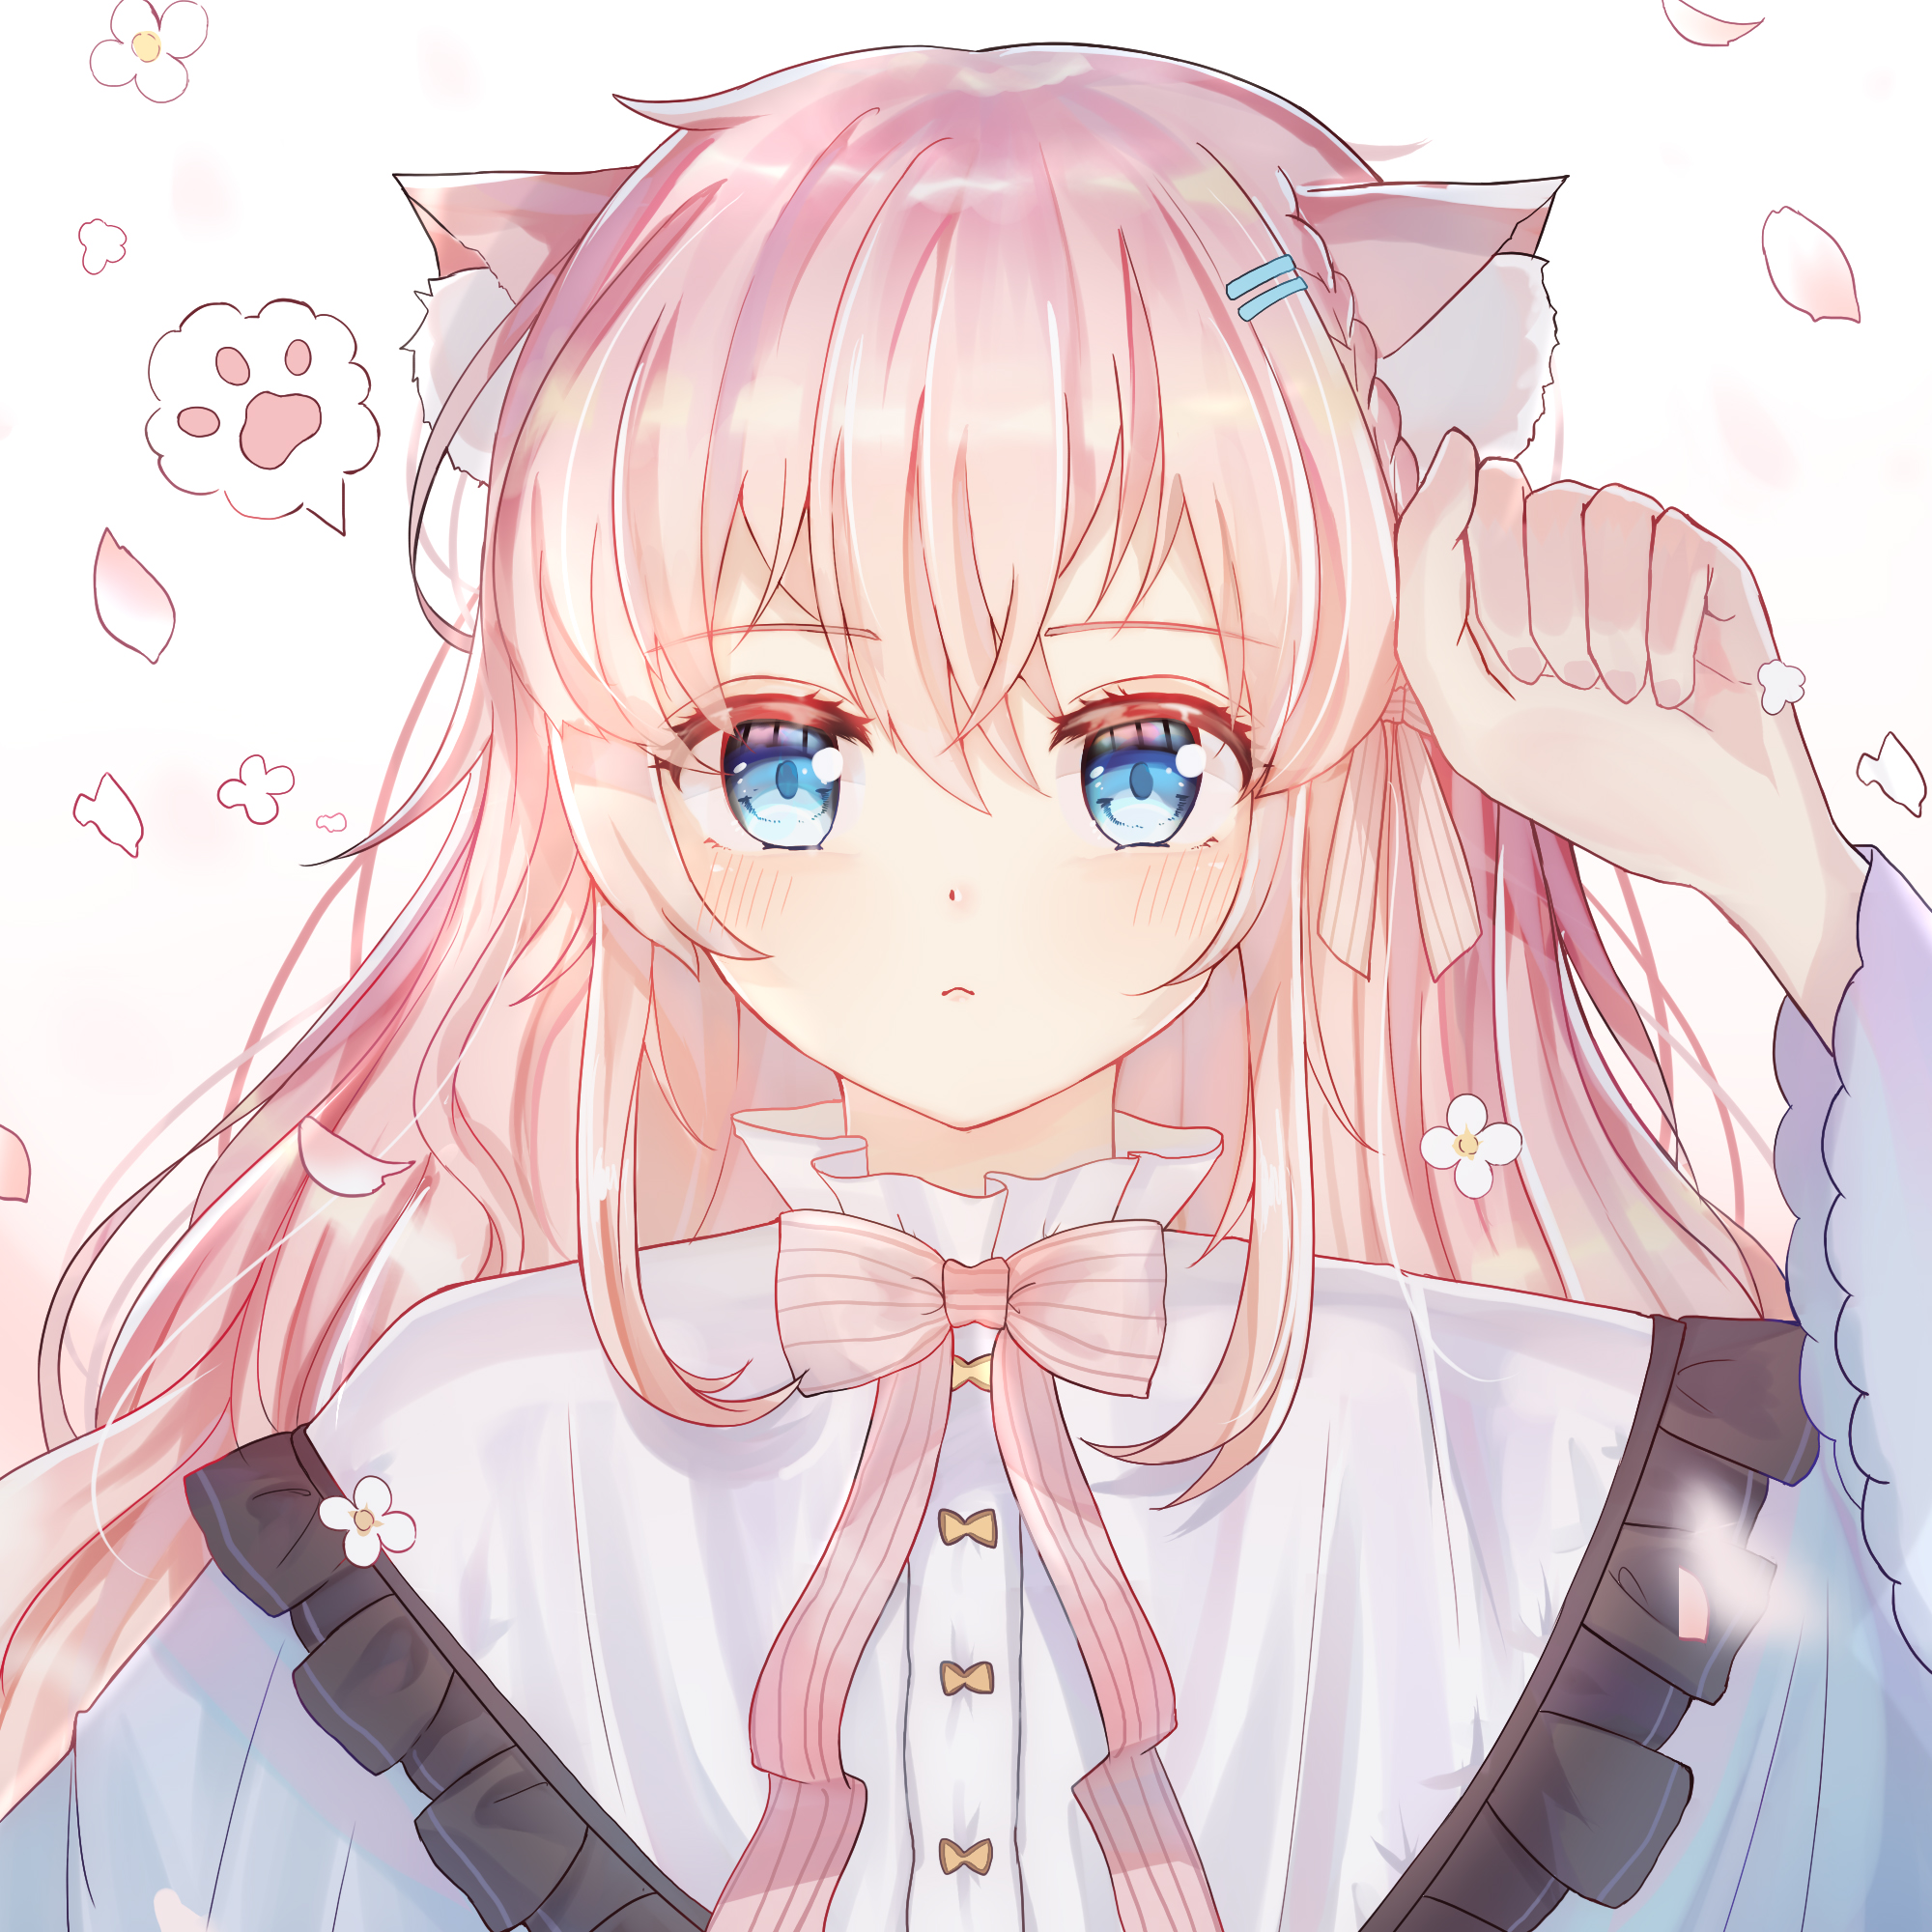 Download wallpaper x neko girl ears cute anime pink hd background